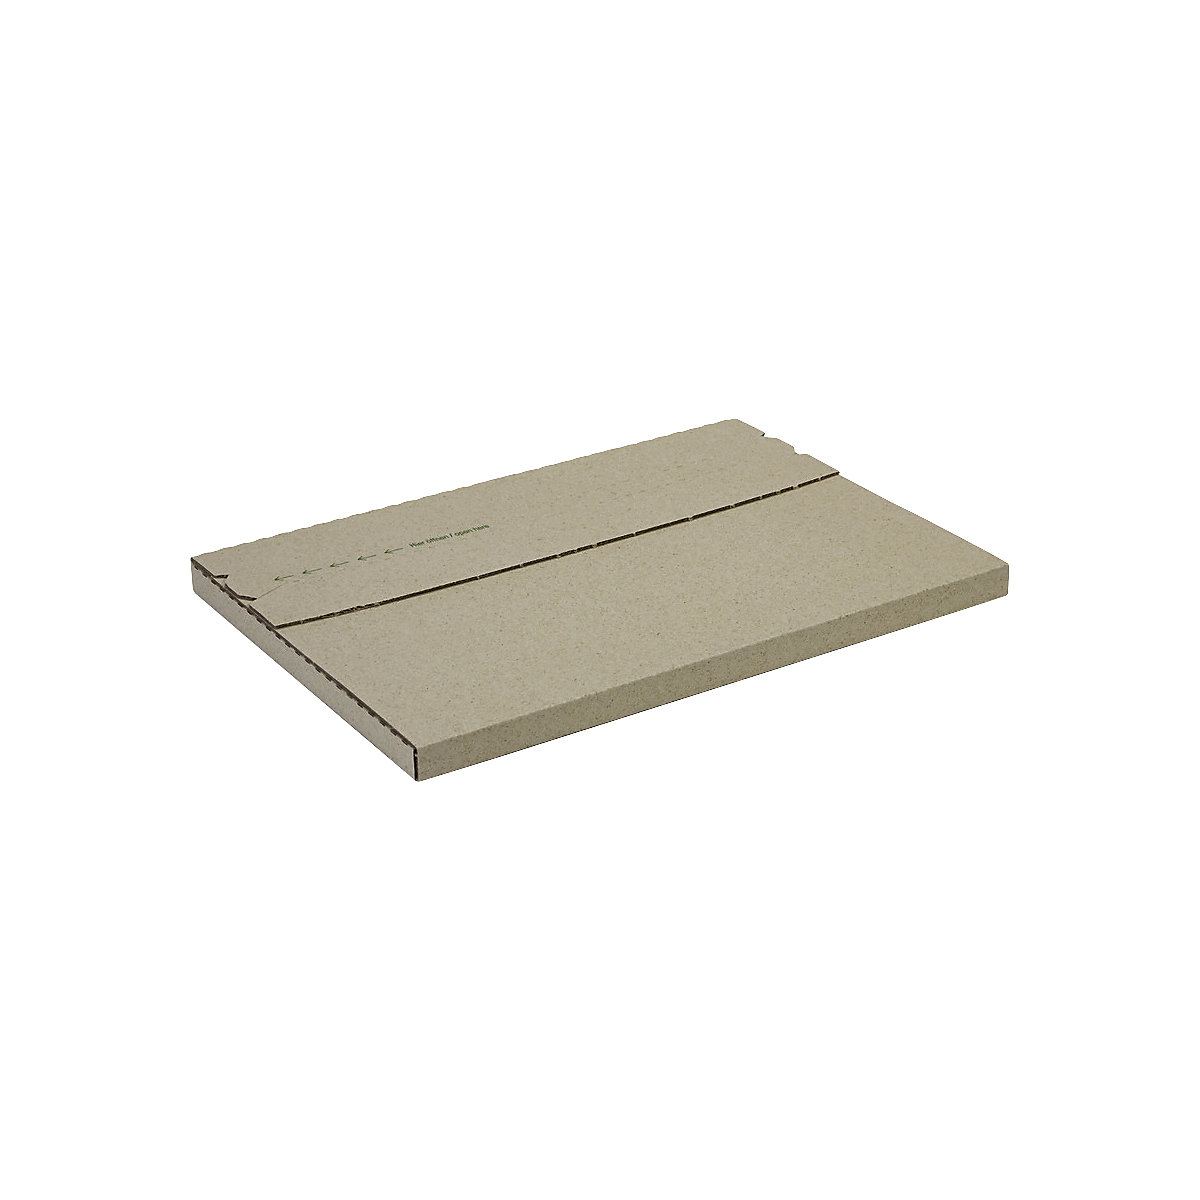 Graspapier-Flachpack terra, selbstklebend, Innen-LxBxH 314 x 225 x 13 mm, ab 100 Stk-1